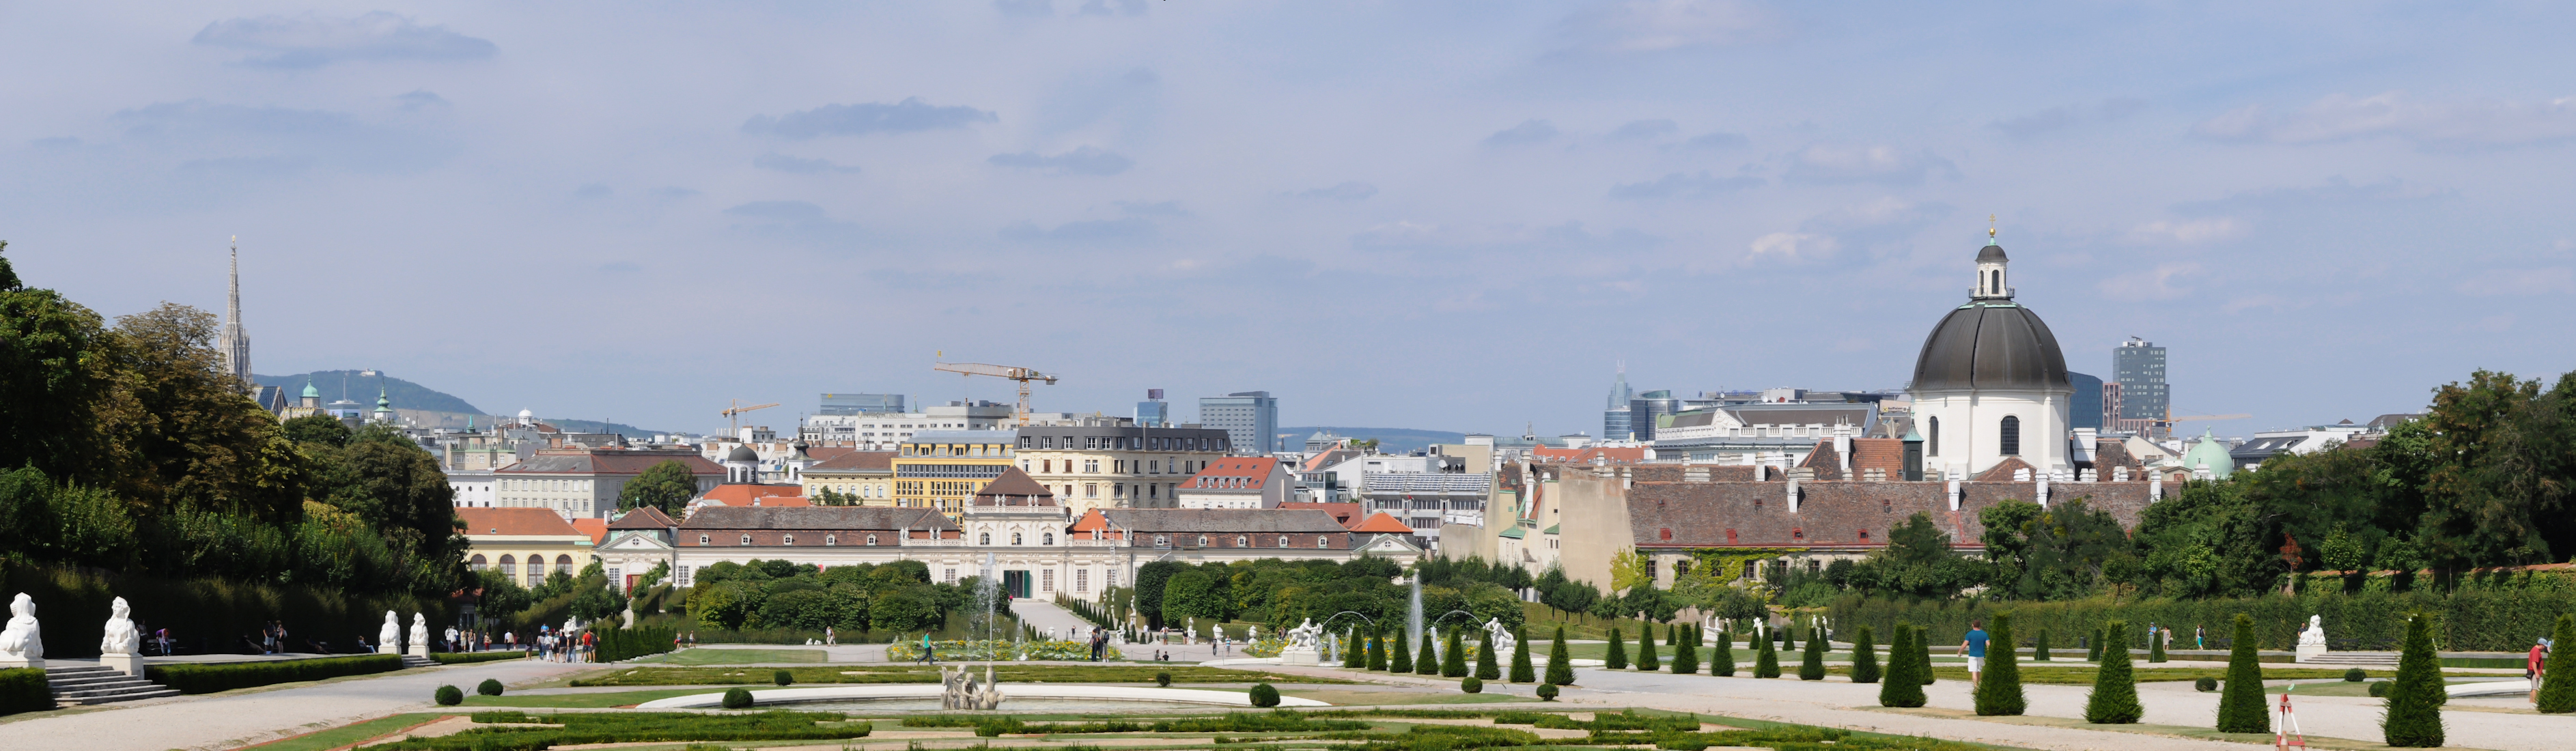 Panorama from Belvedere - Vienna